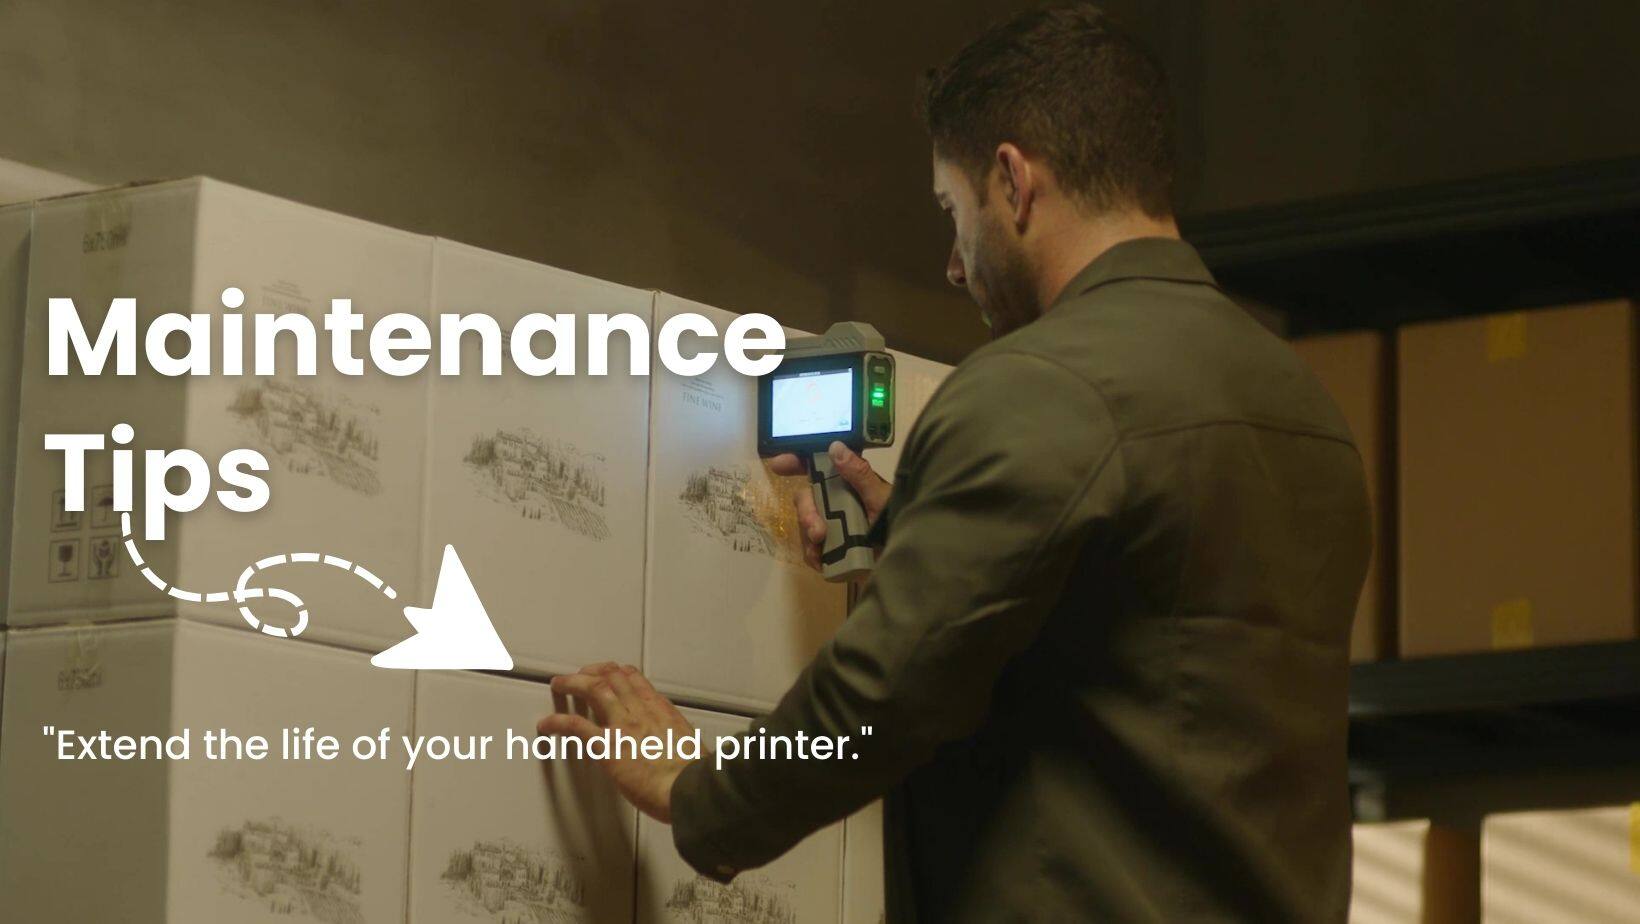 Tips for maintenance handheld printers